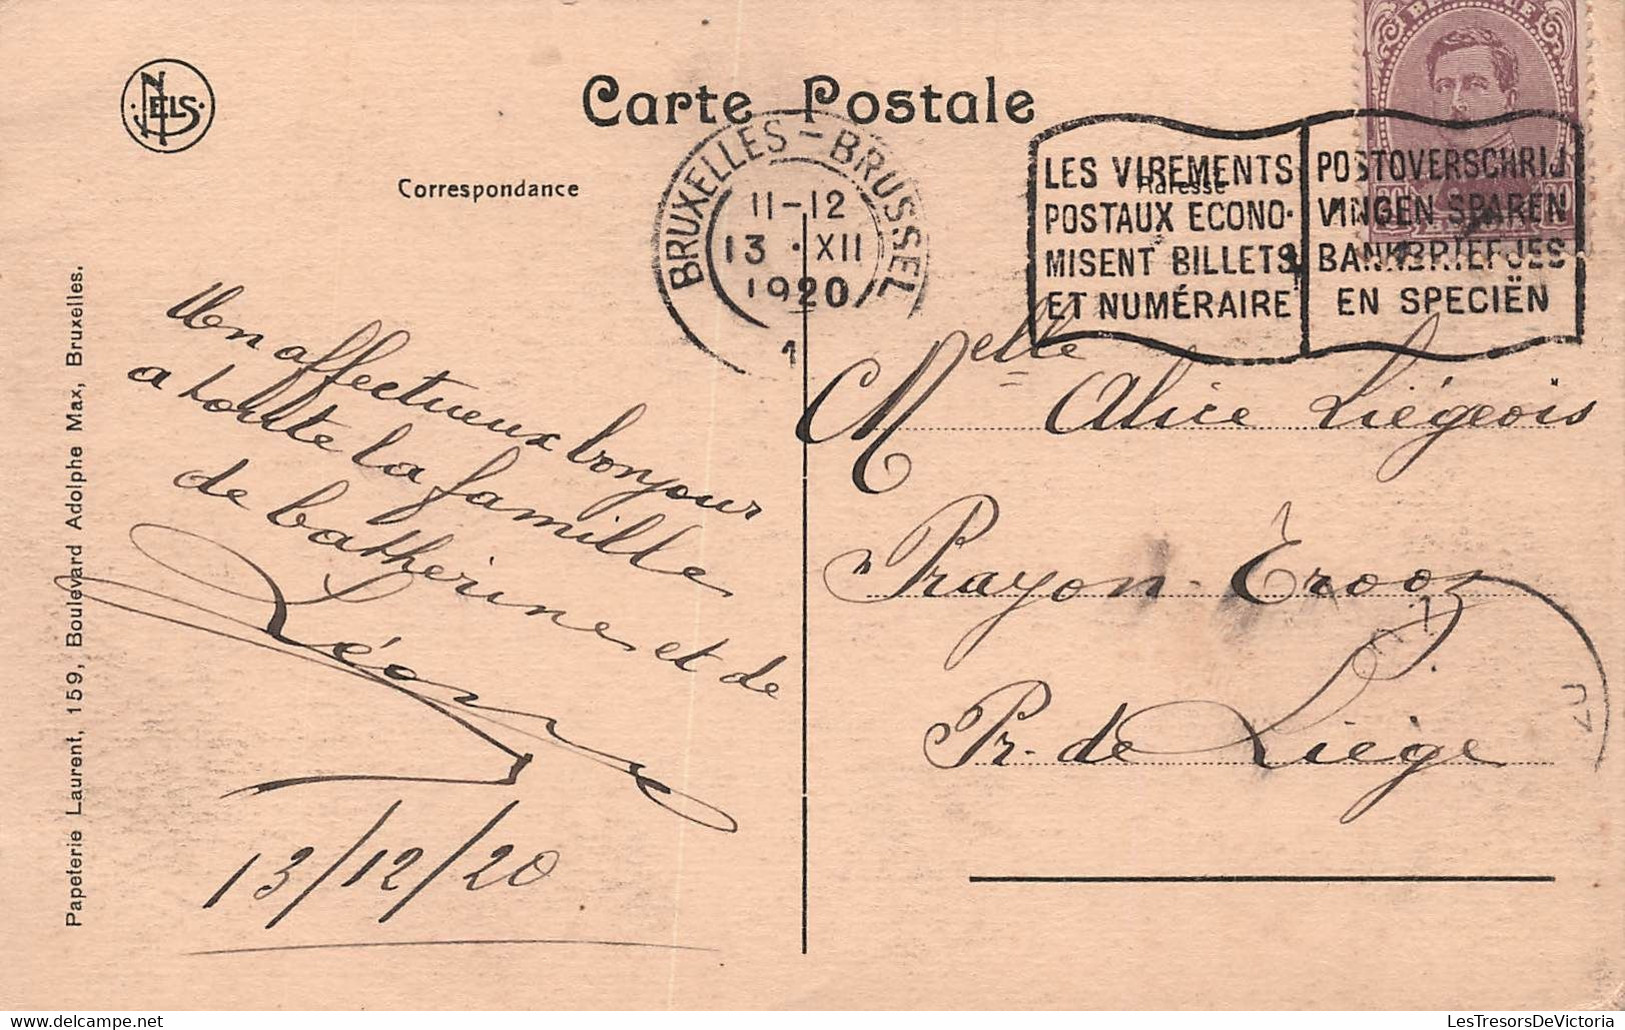 Lot de 10 cp Bruxelles  - carte postale ancienne - A SAISIR